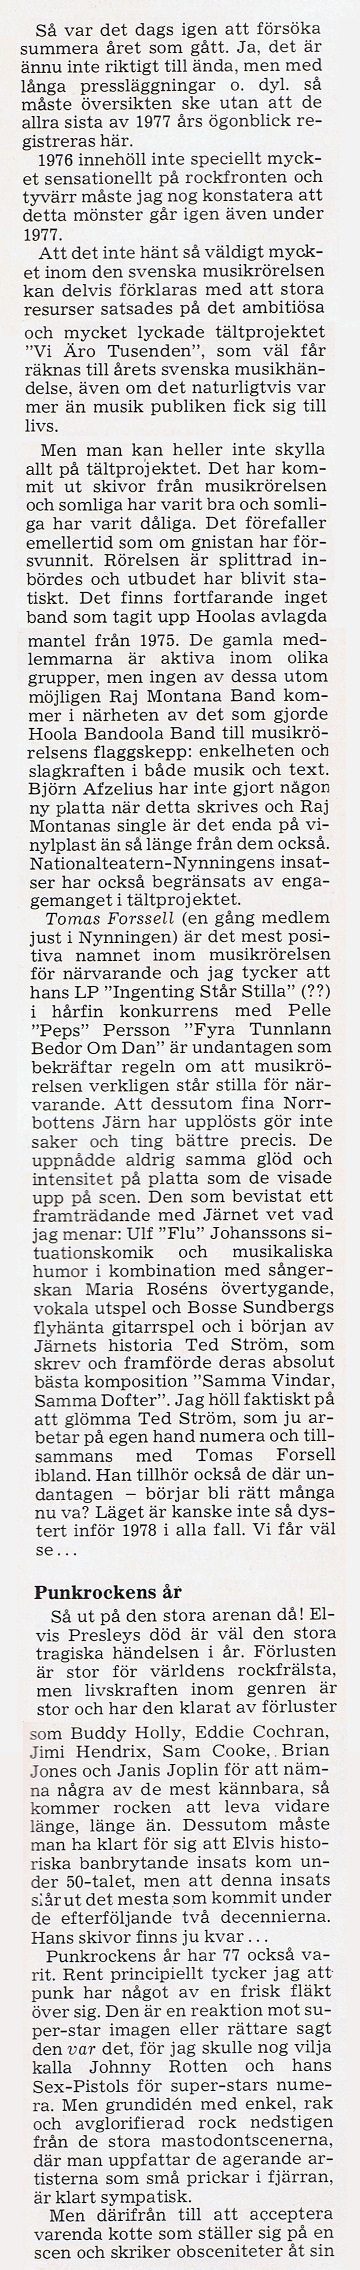 1977-08-00 Musiktidningen page 20-21 composite.jpg